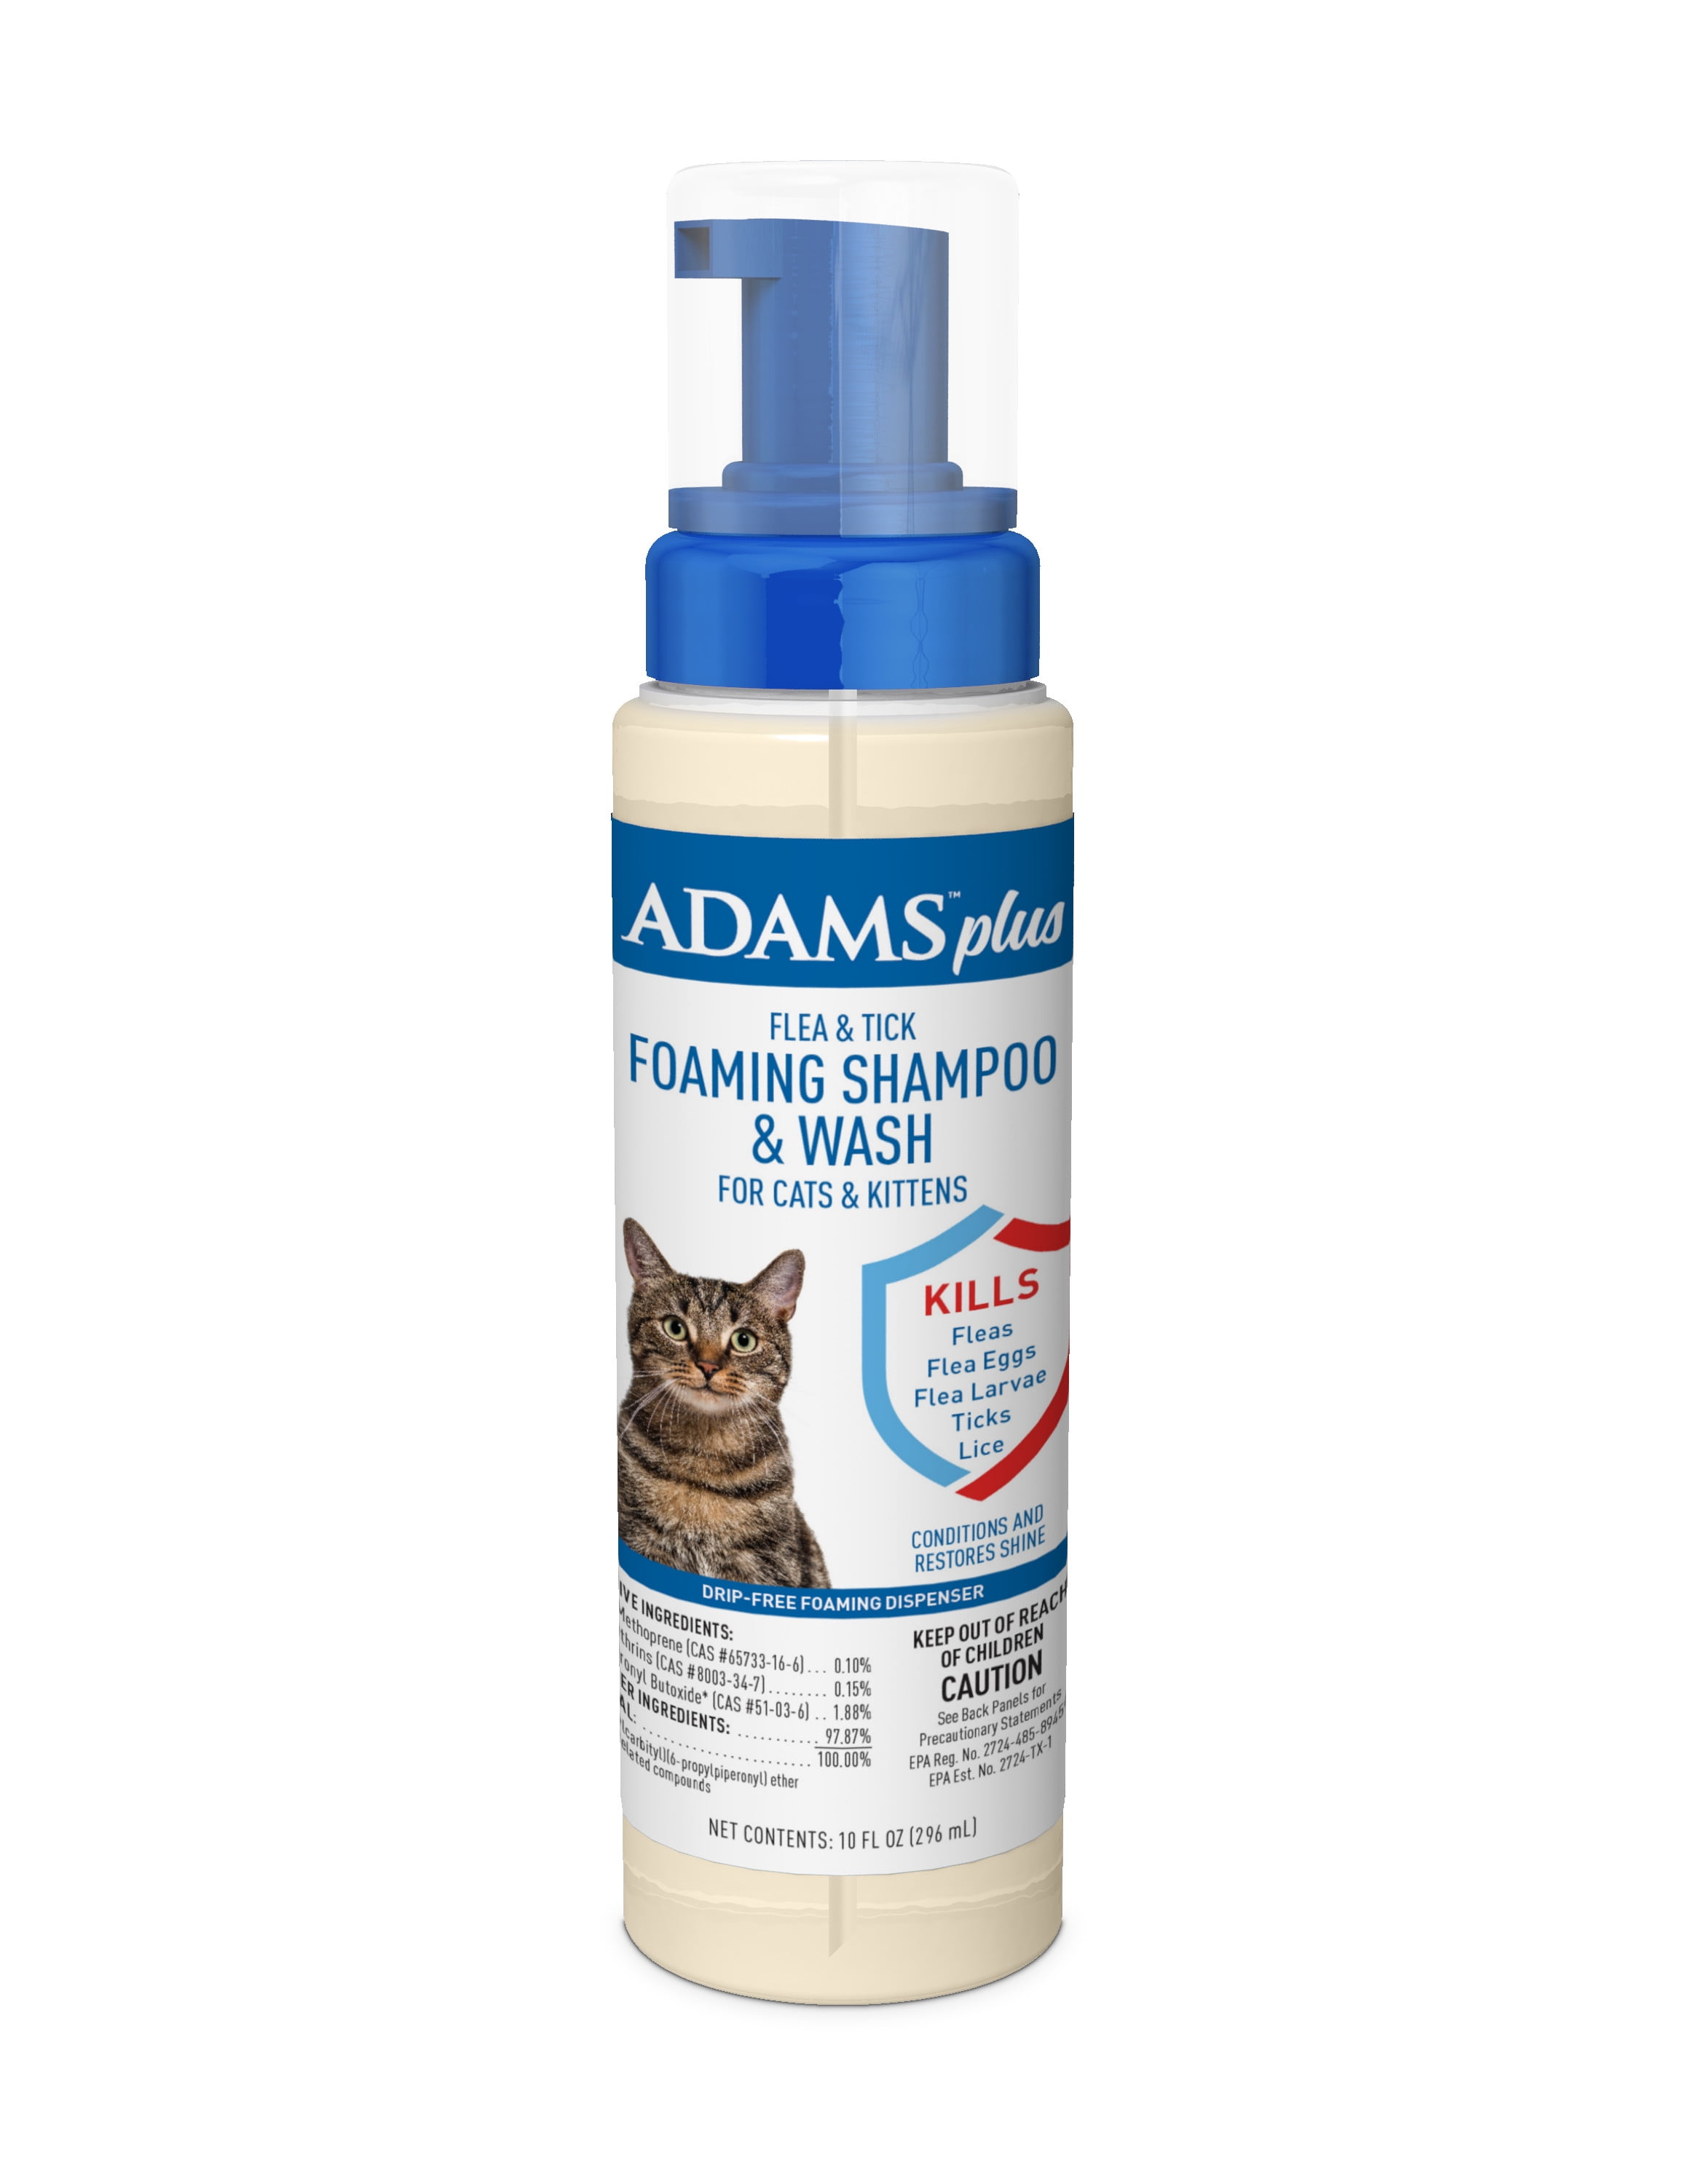 Adams Plus Flea & Tick Foaming Shampoo & Wash for Cats & Kittens, 10